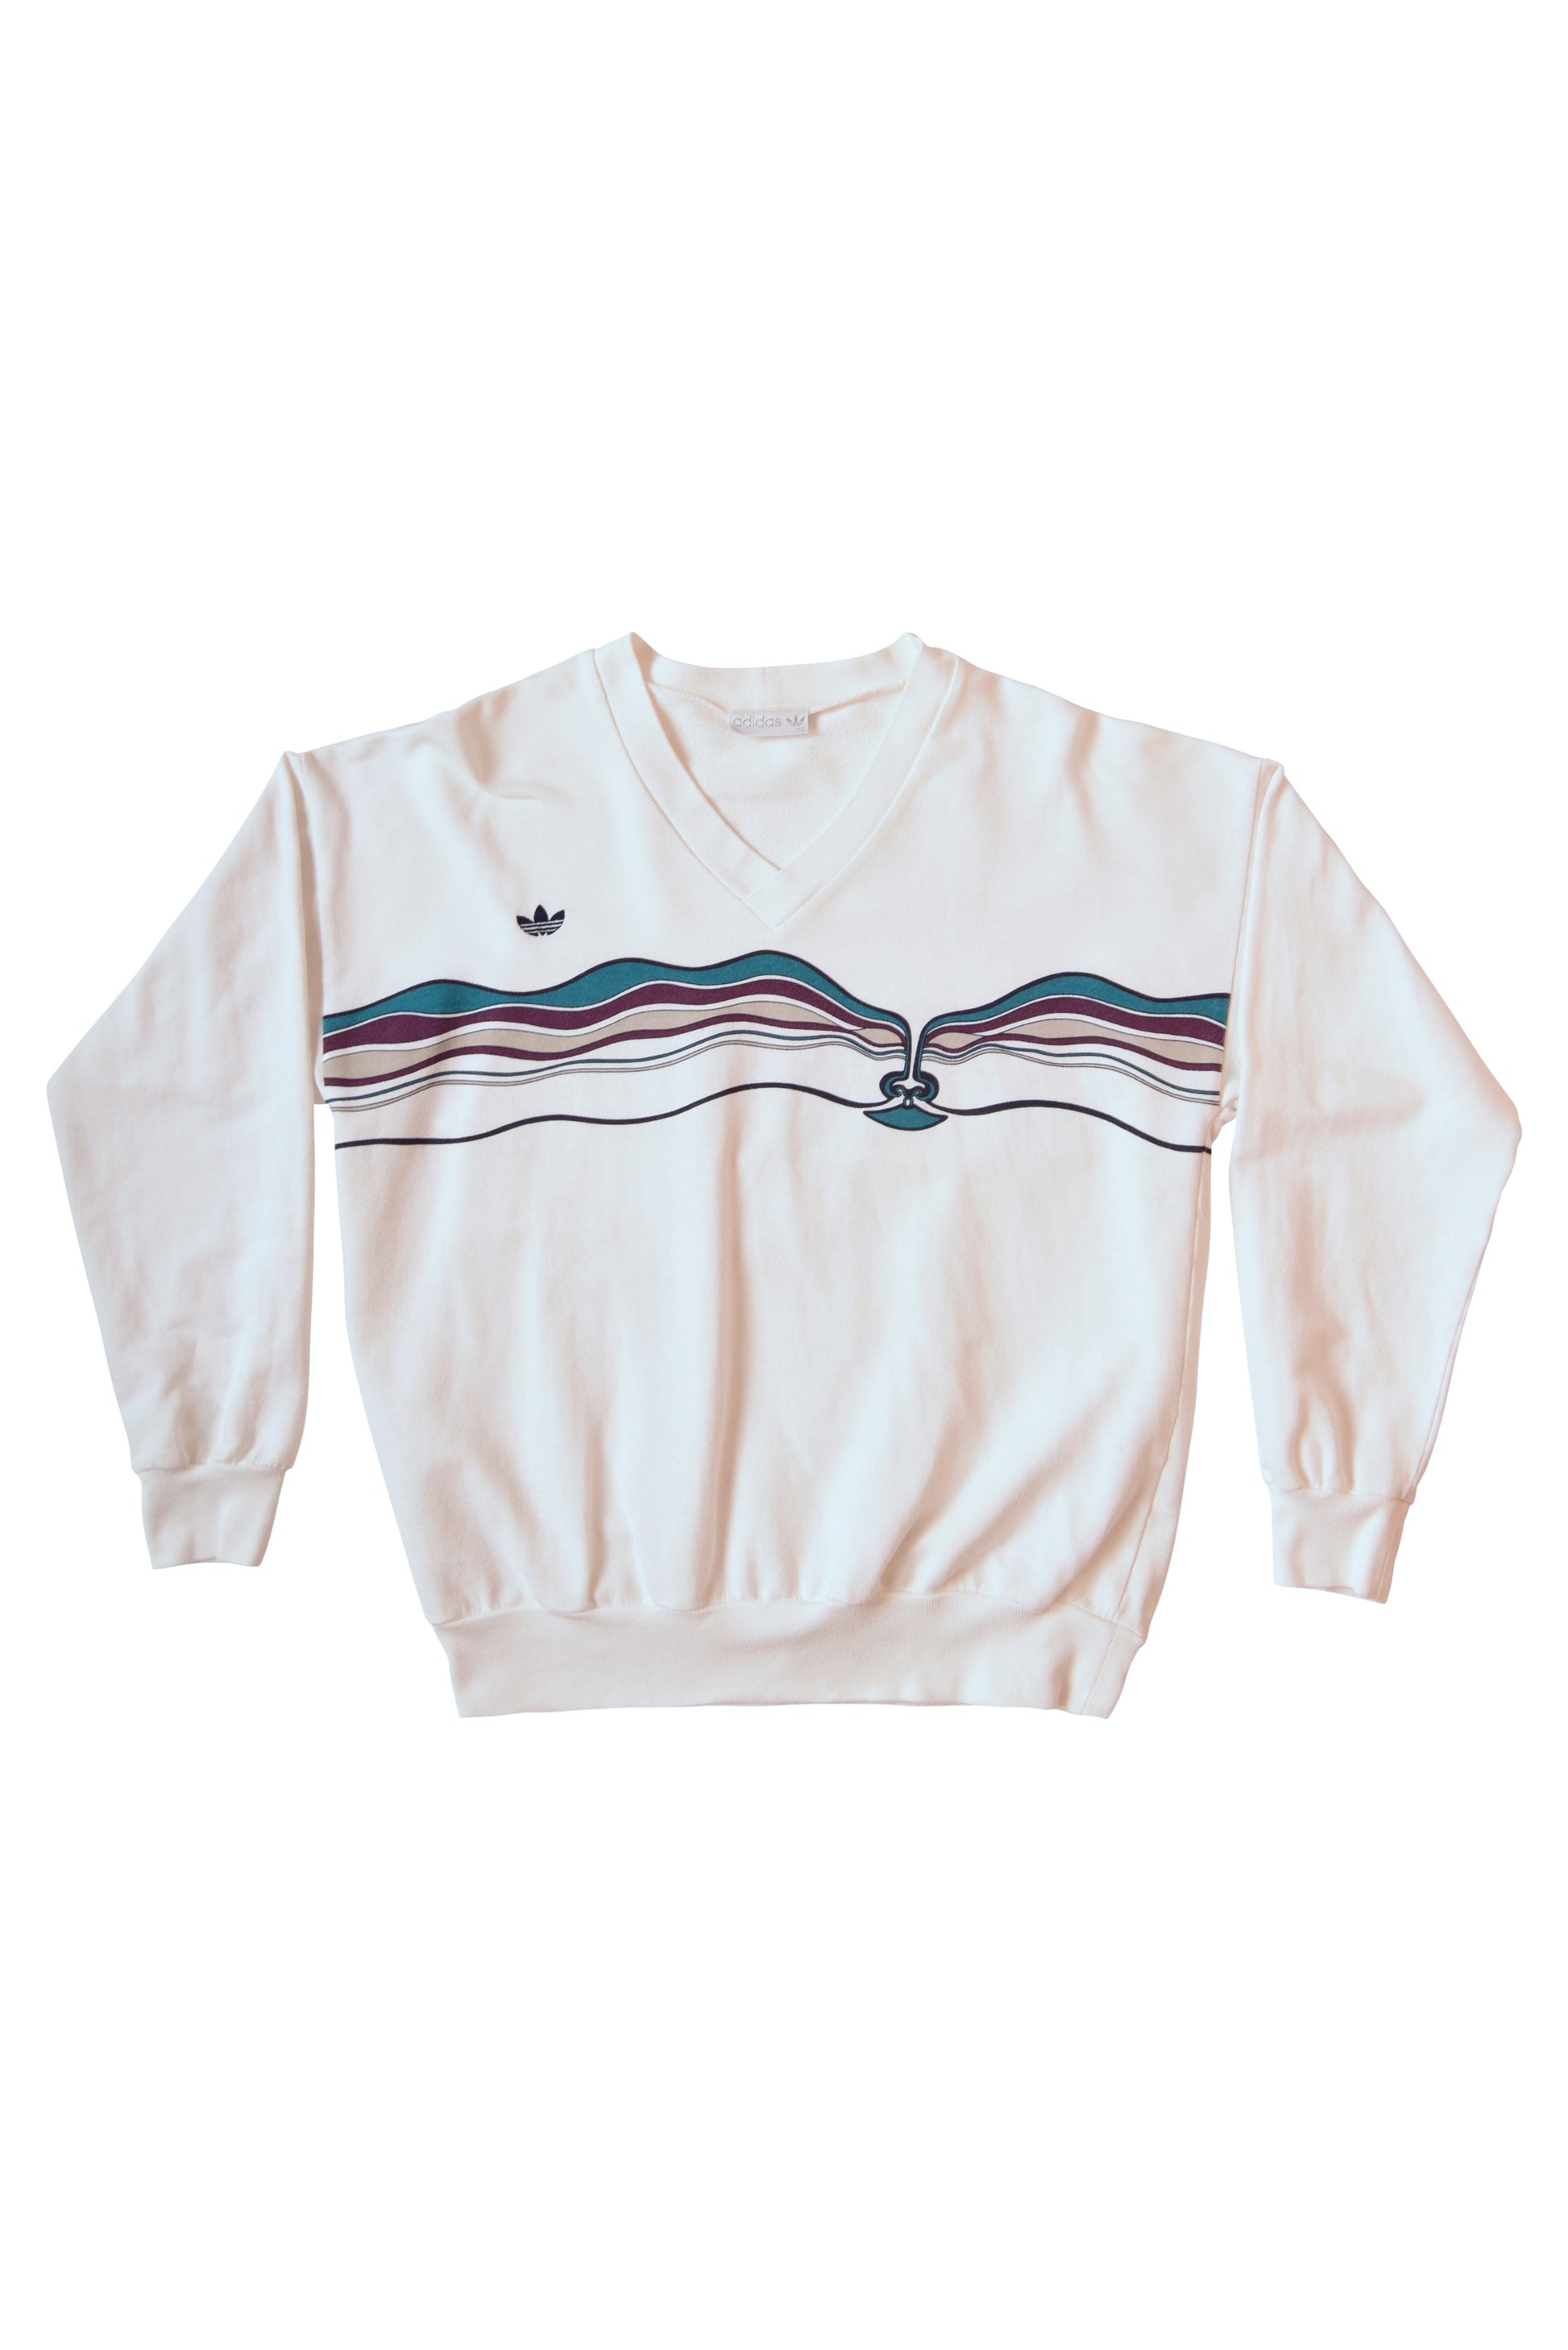 Vintage Adidas Ivan Lendl Tennis Sweatshirt Made in West Germany 80's Size L Sad Face